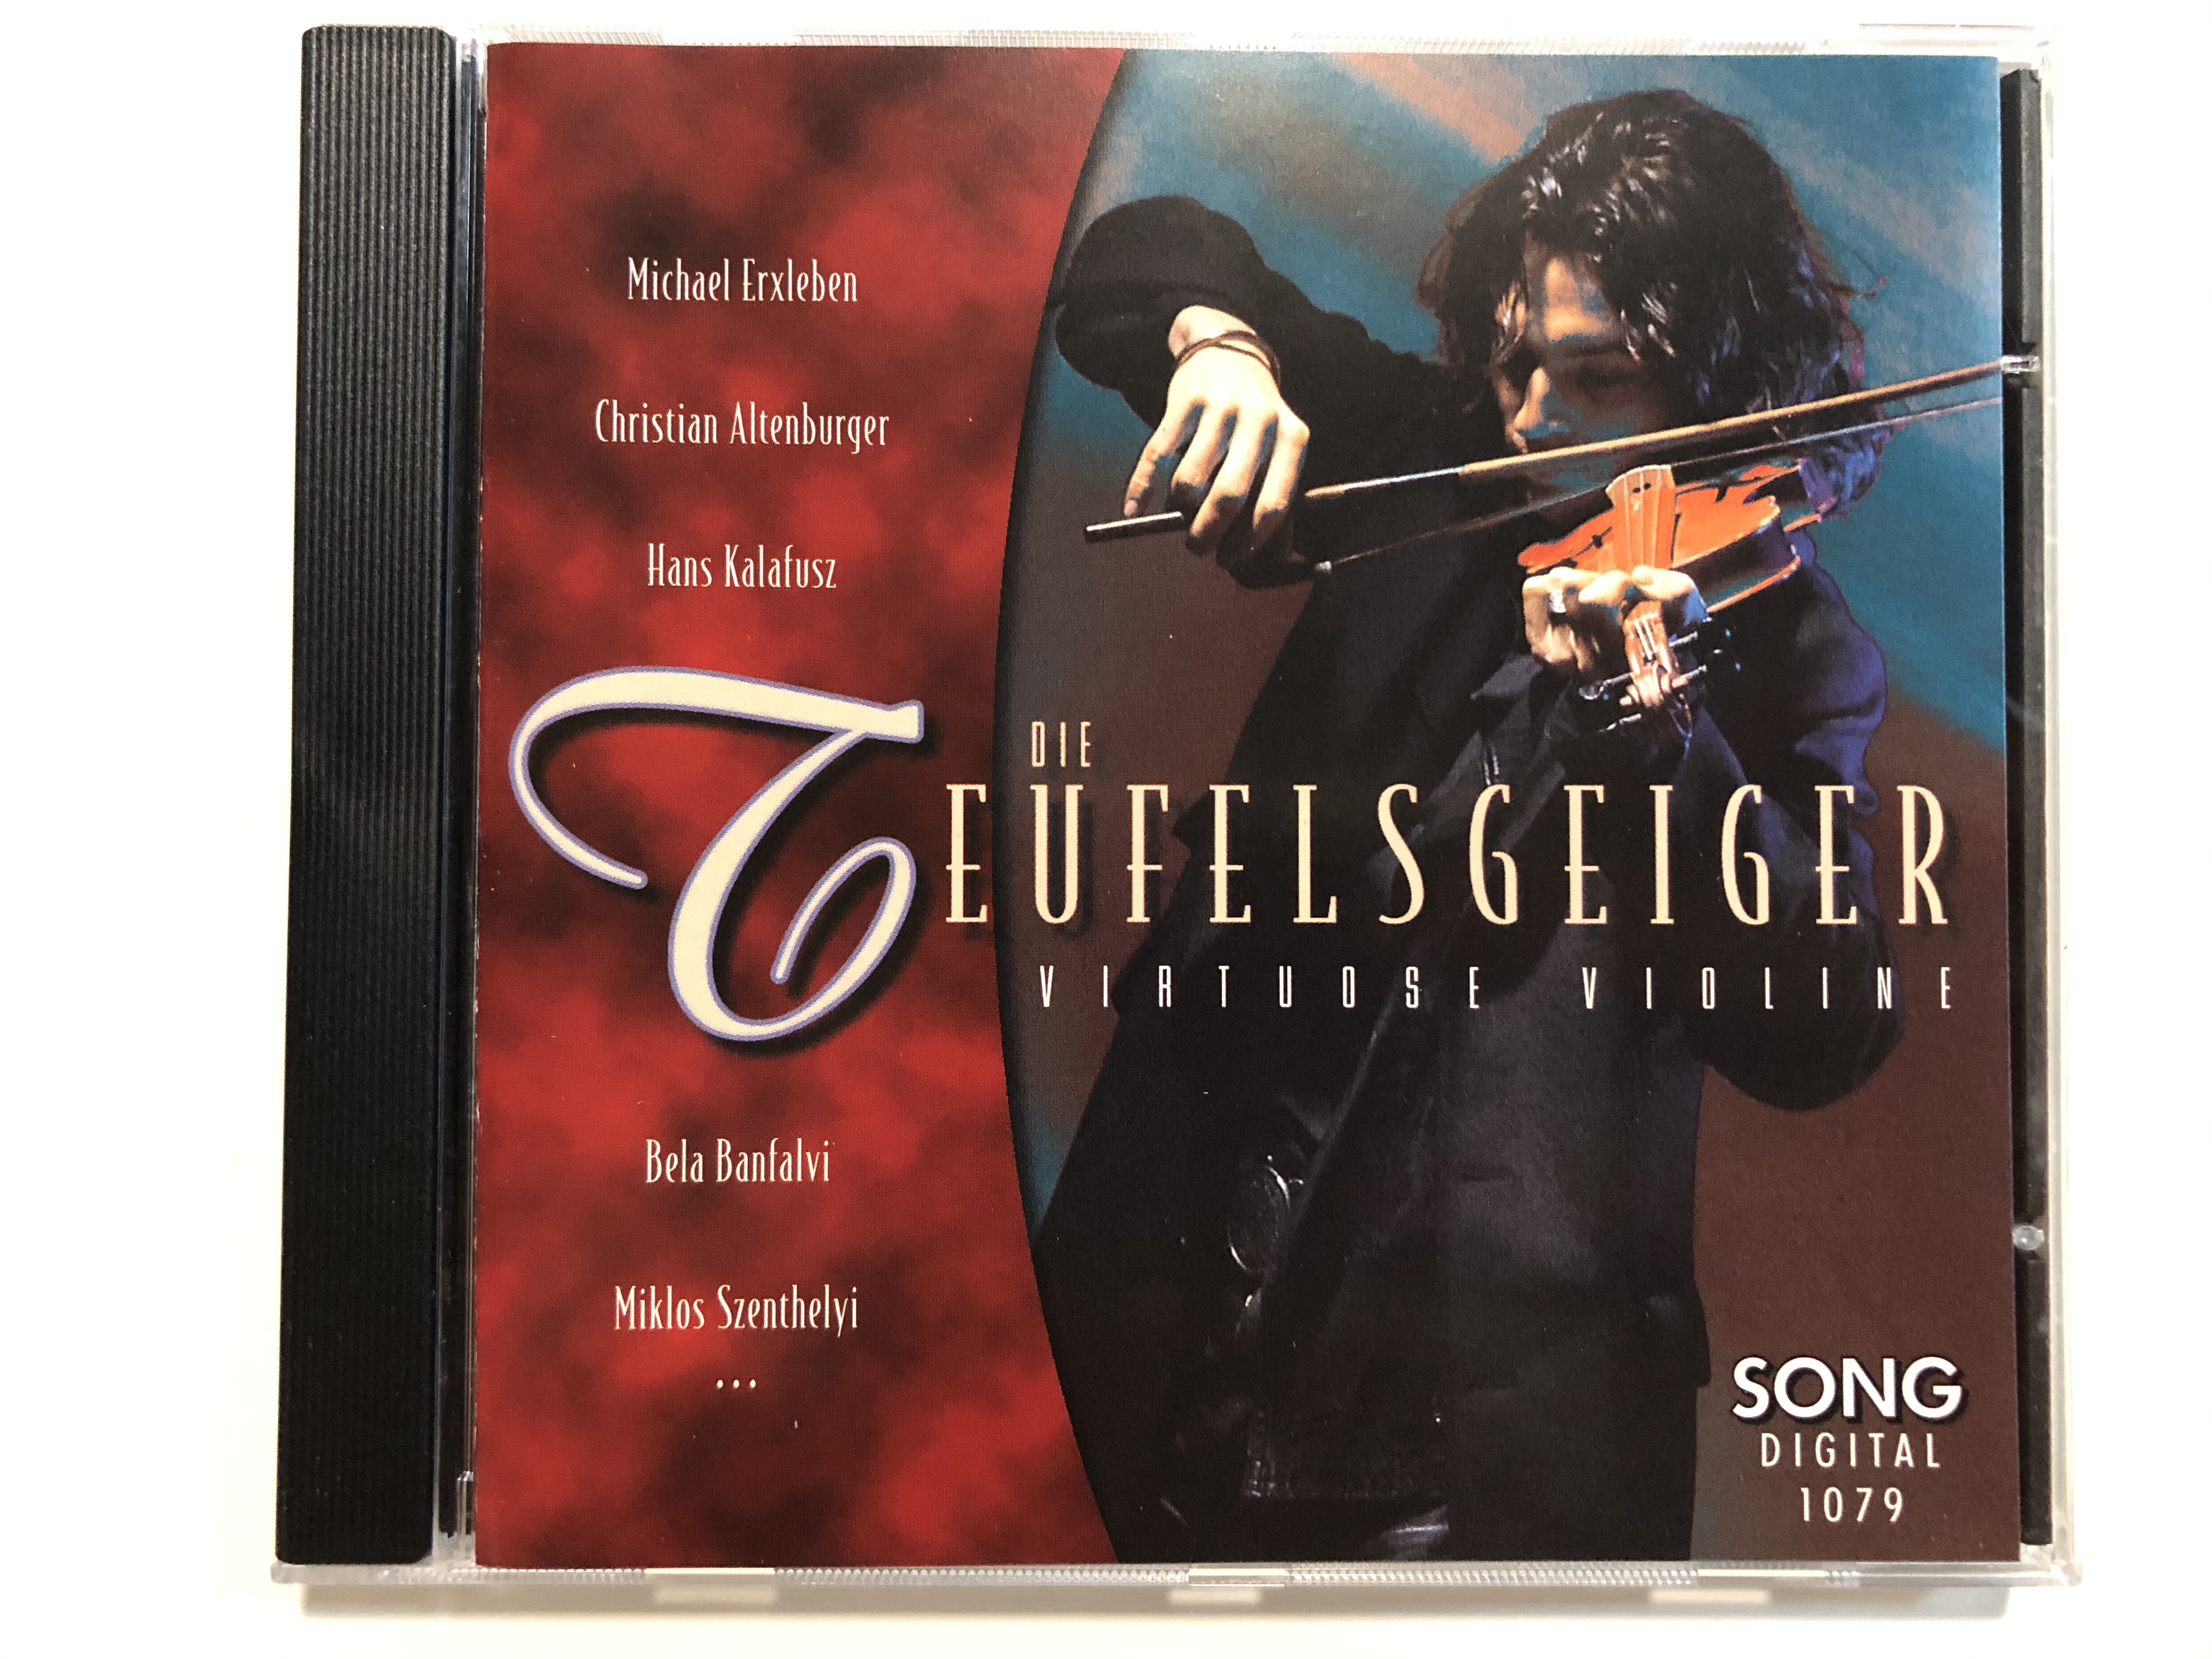 die-teufelsgeiger-virtuose-violine-michael-erxleben-christian-altenburger-hans-kalafusz.-bela-banfalvi-miklos-szenthelyi-...-song-digital-audio-cd-1998-stereo-1079-1-.jpg